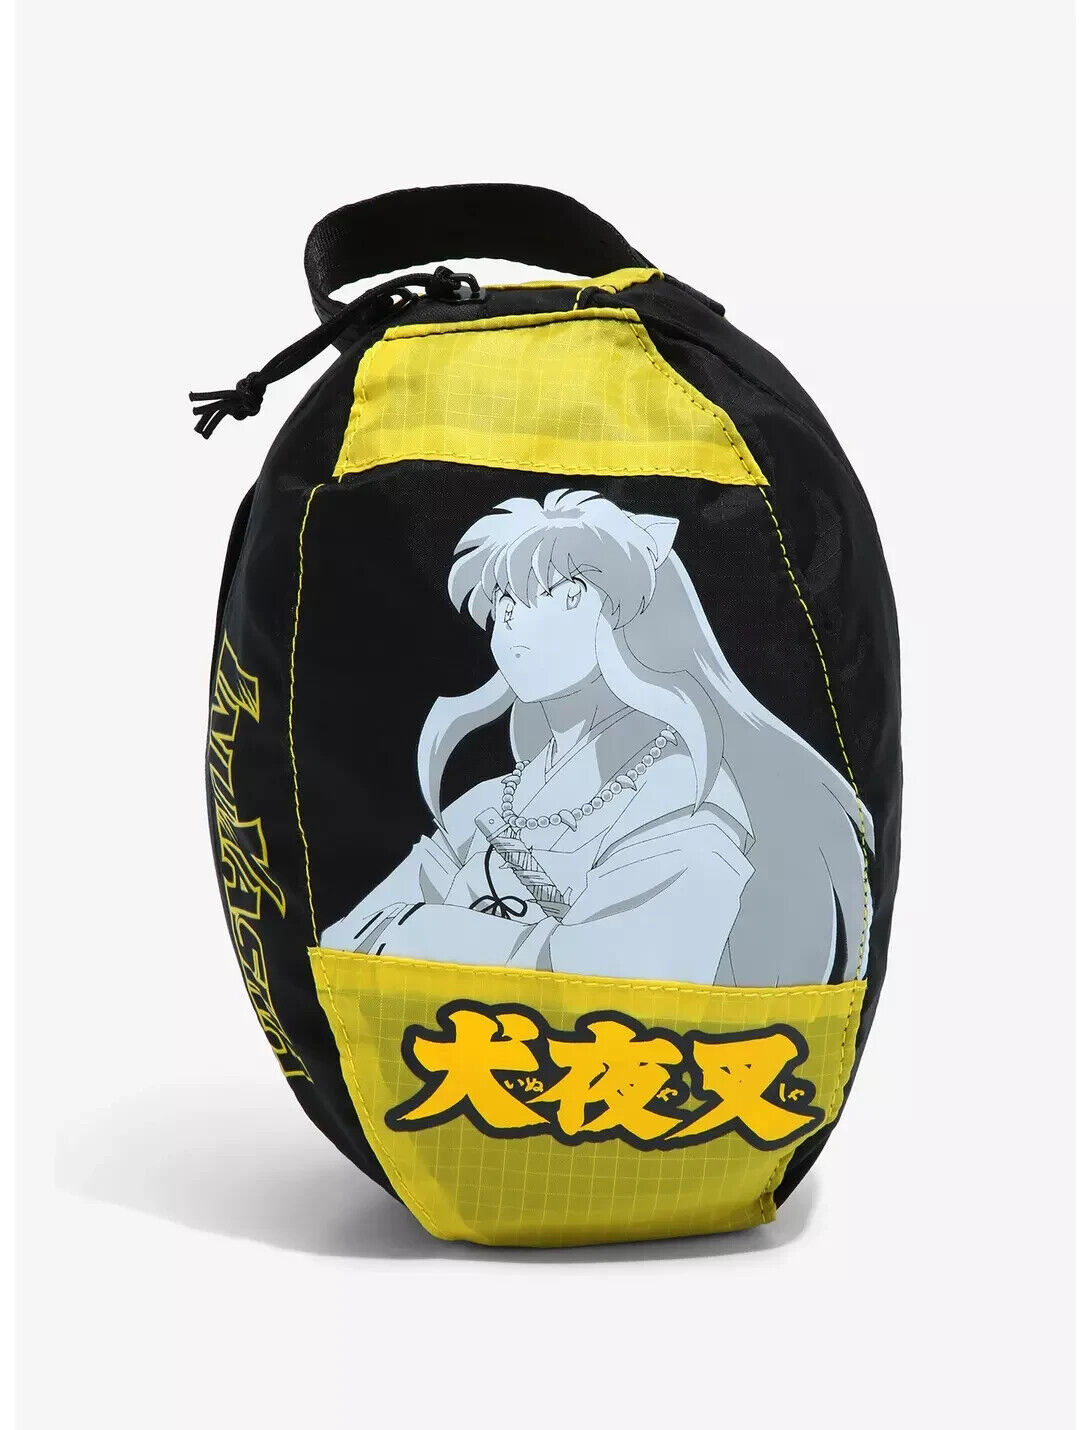 InuYasha Tonal Portrait Toiletries Bag For & Small Cosmetics Anime Pouch Yellow